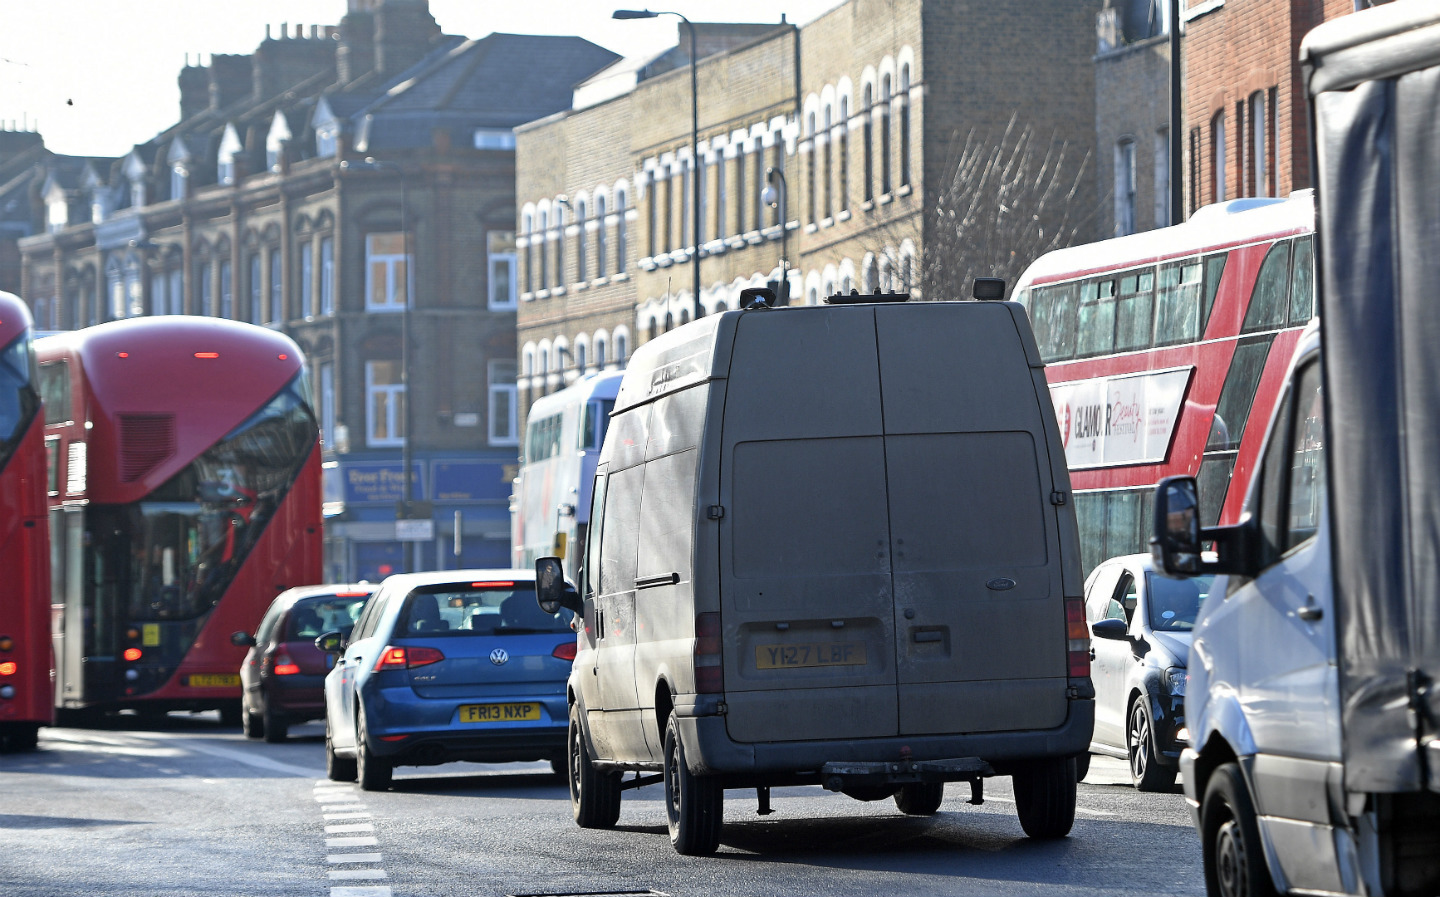 London pay-per-mile road charging proposal